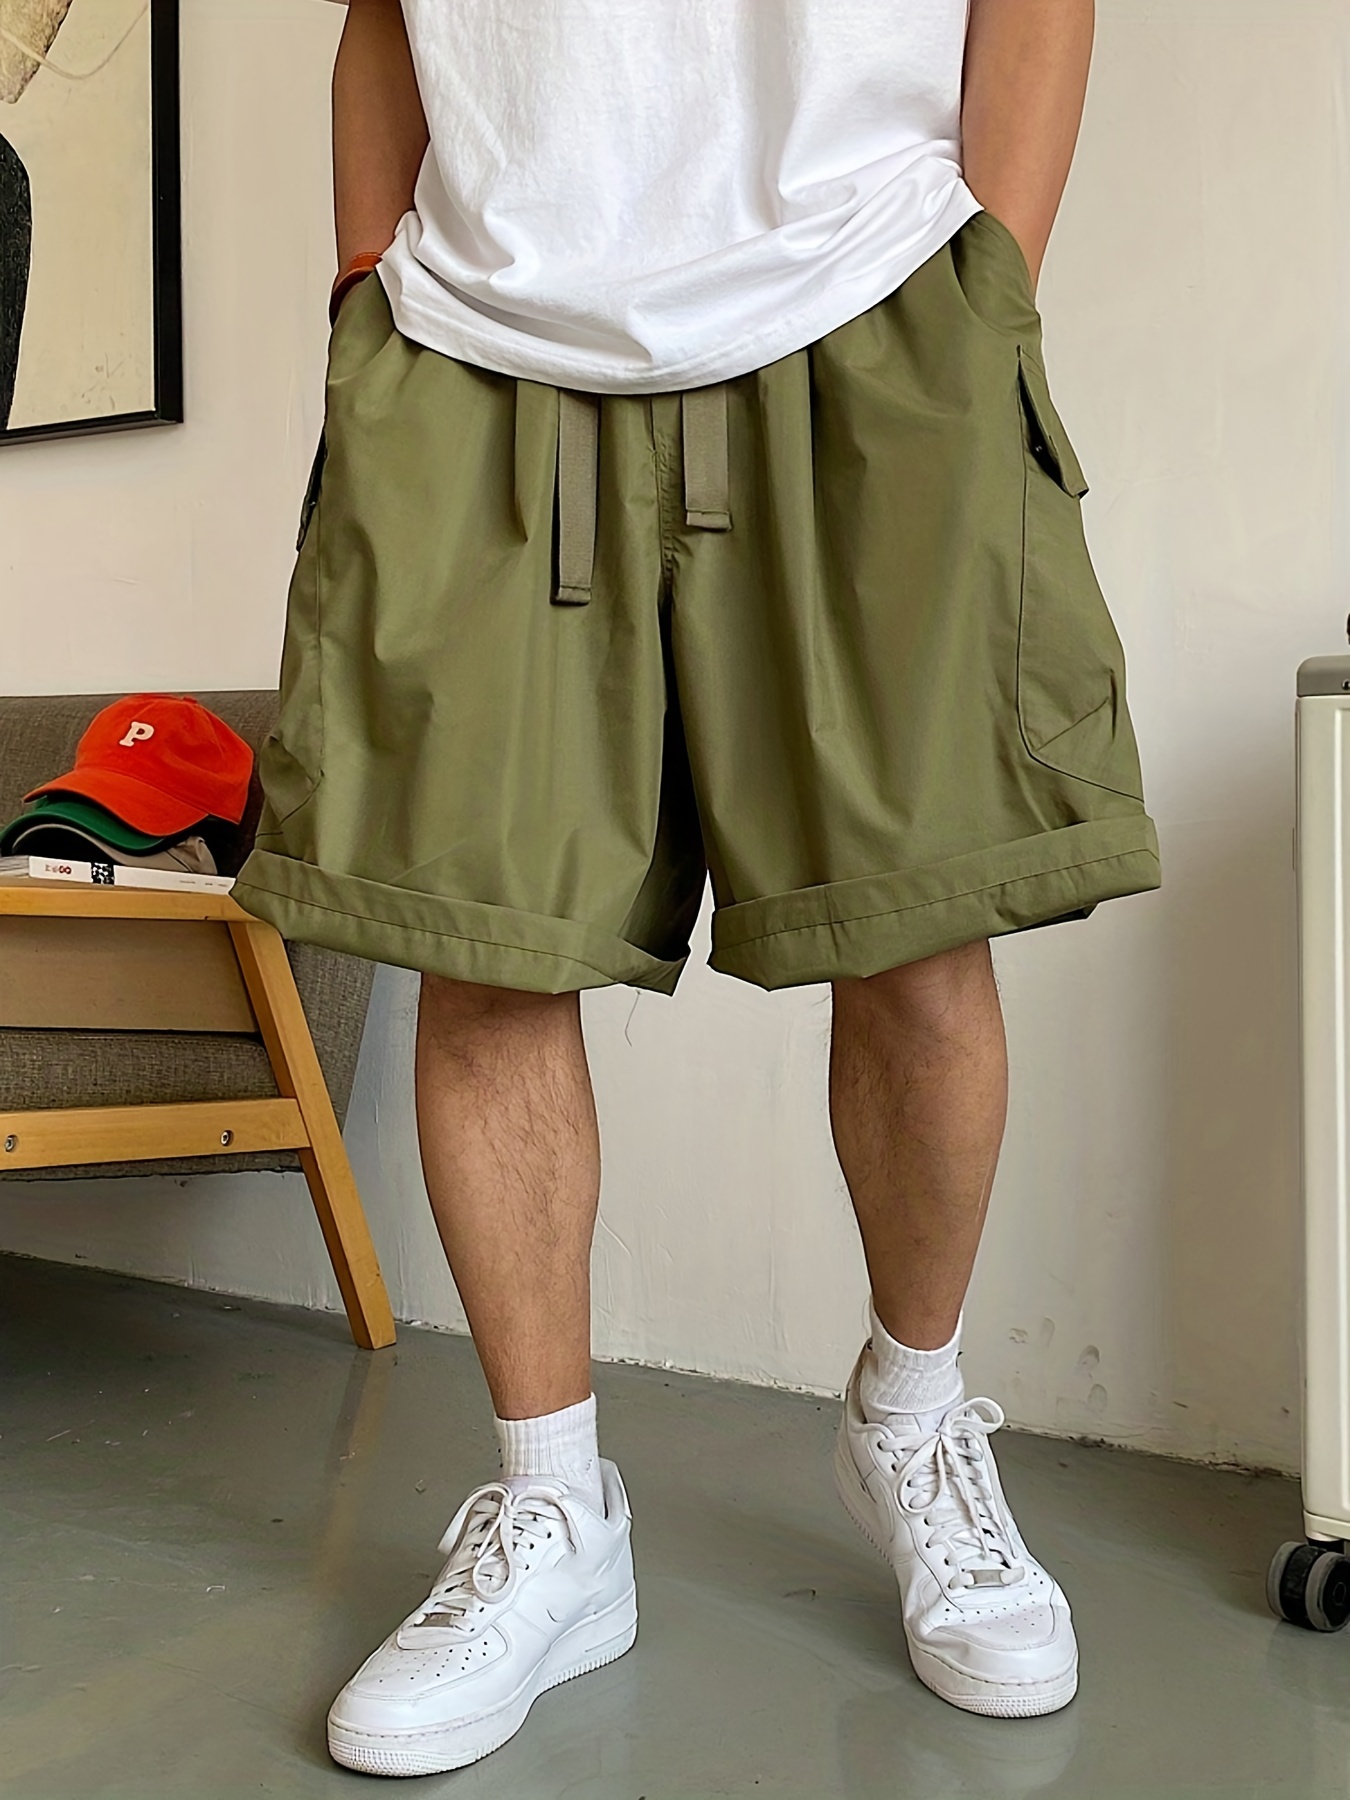 Boyzn Men's 2 Pack Casual Shorts Cotton Workout Elastic Waist Short Pants  Adjustable Drawstring Gym Athletic Shorts with Zipper Pockets Black/Army  Green-S at Amazon Men's Clothing store